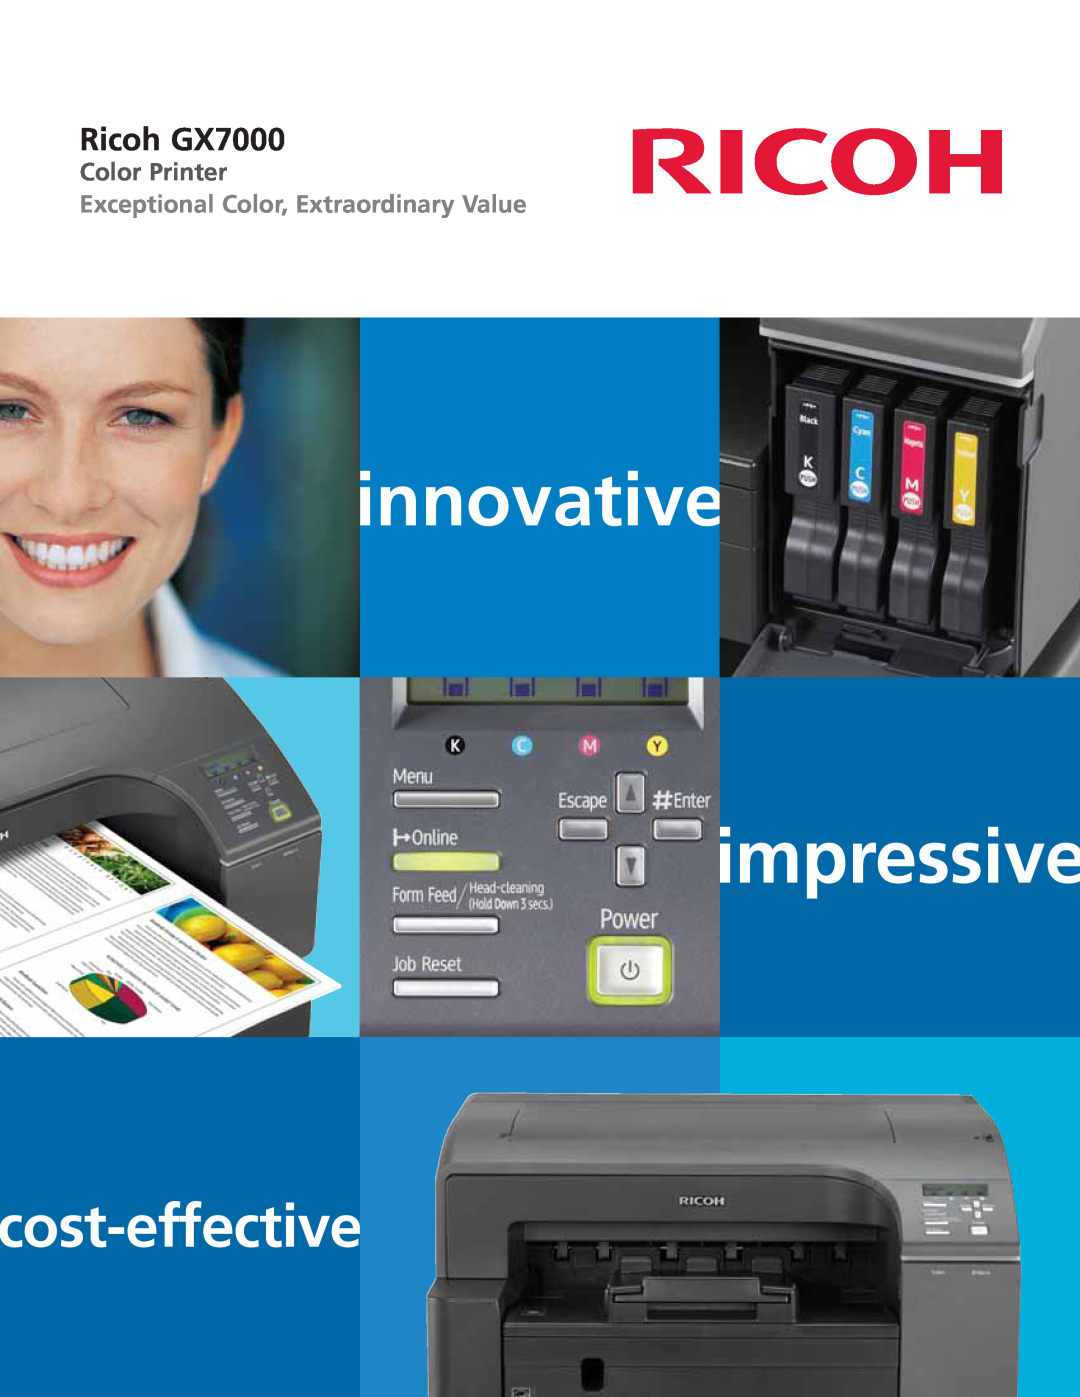 Ricoh manual impressive, innovative, cost-effective, Ricoh GX7000, Color Printer 